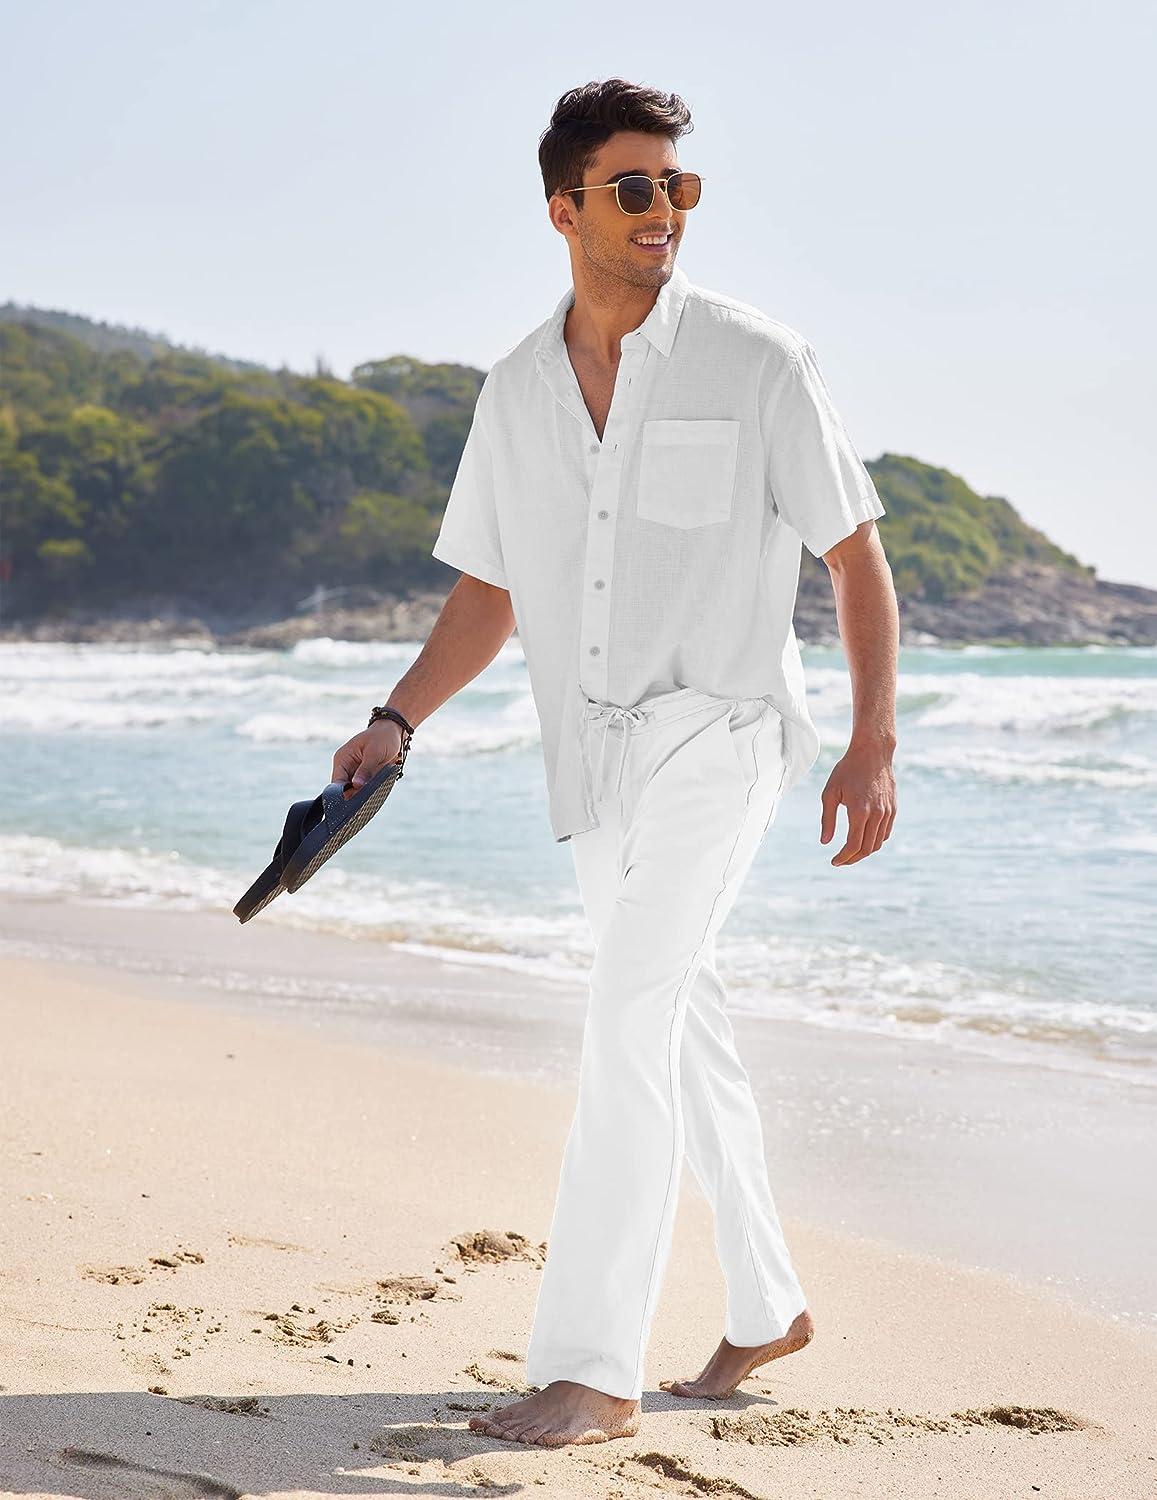 COOFANDY Men's Casual Linen Pants Elastic Waist Drawstring Beach